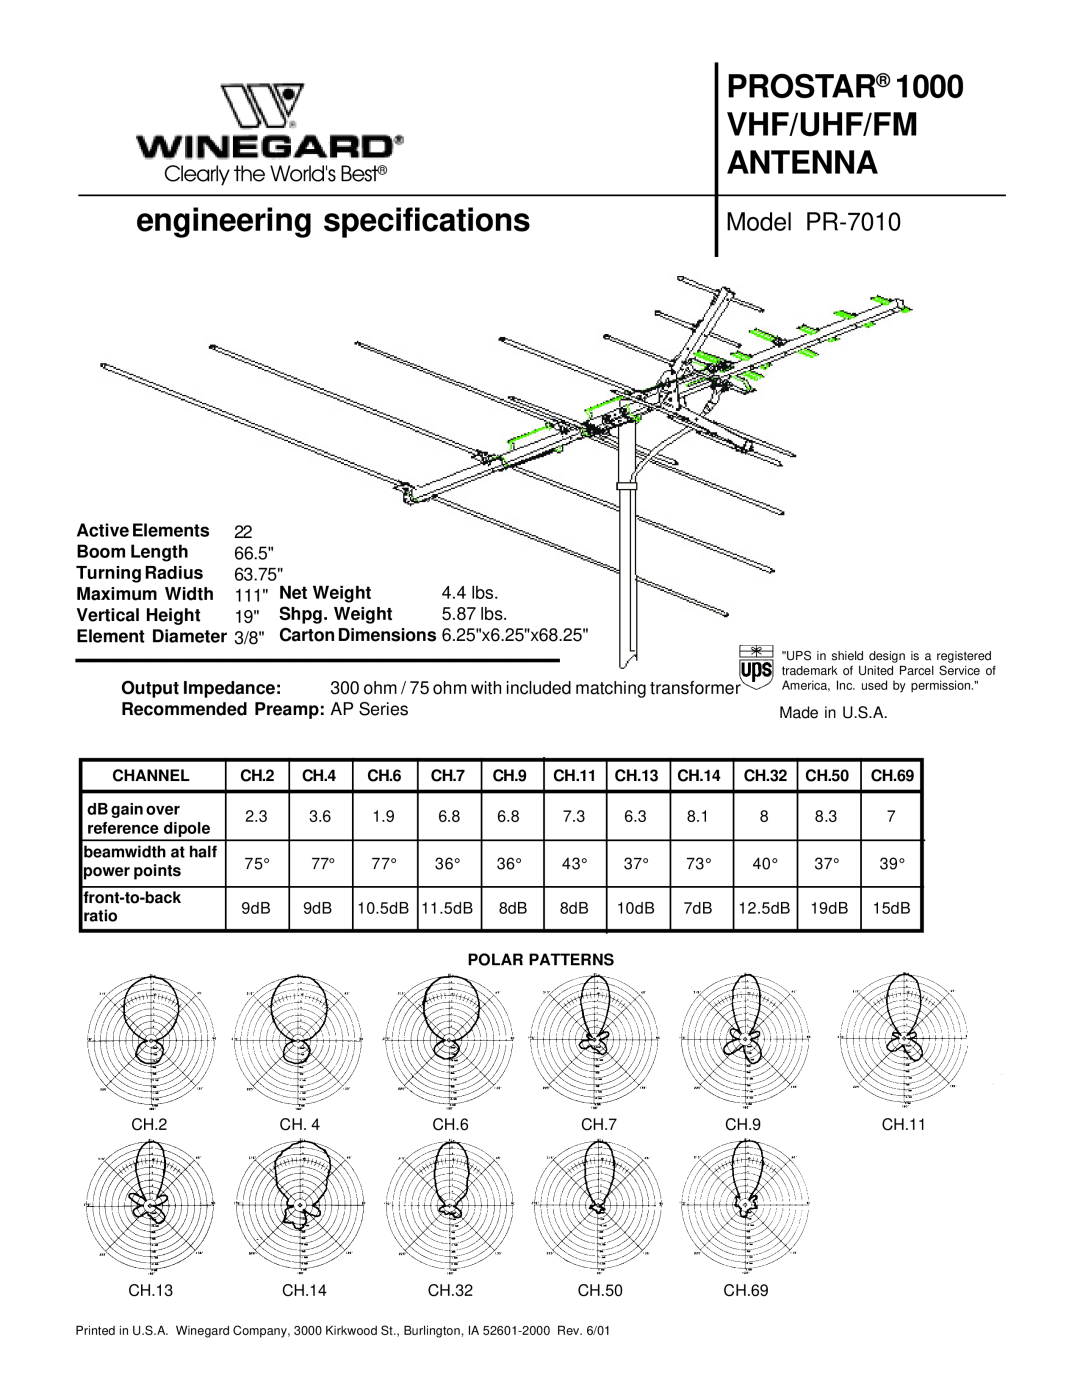 Winegard specifications Prostar, Vhf/Uhf/Fm, Antenna, engineering specifications, Model PR-7010 